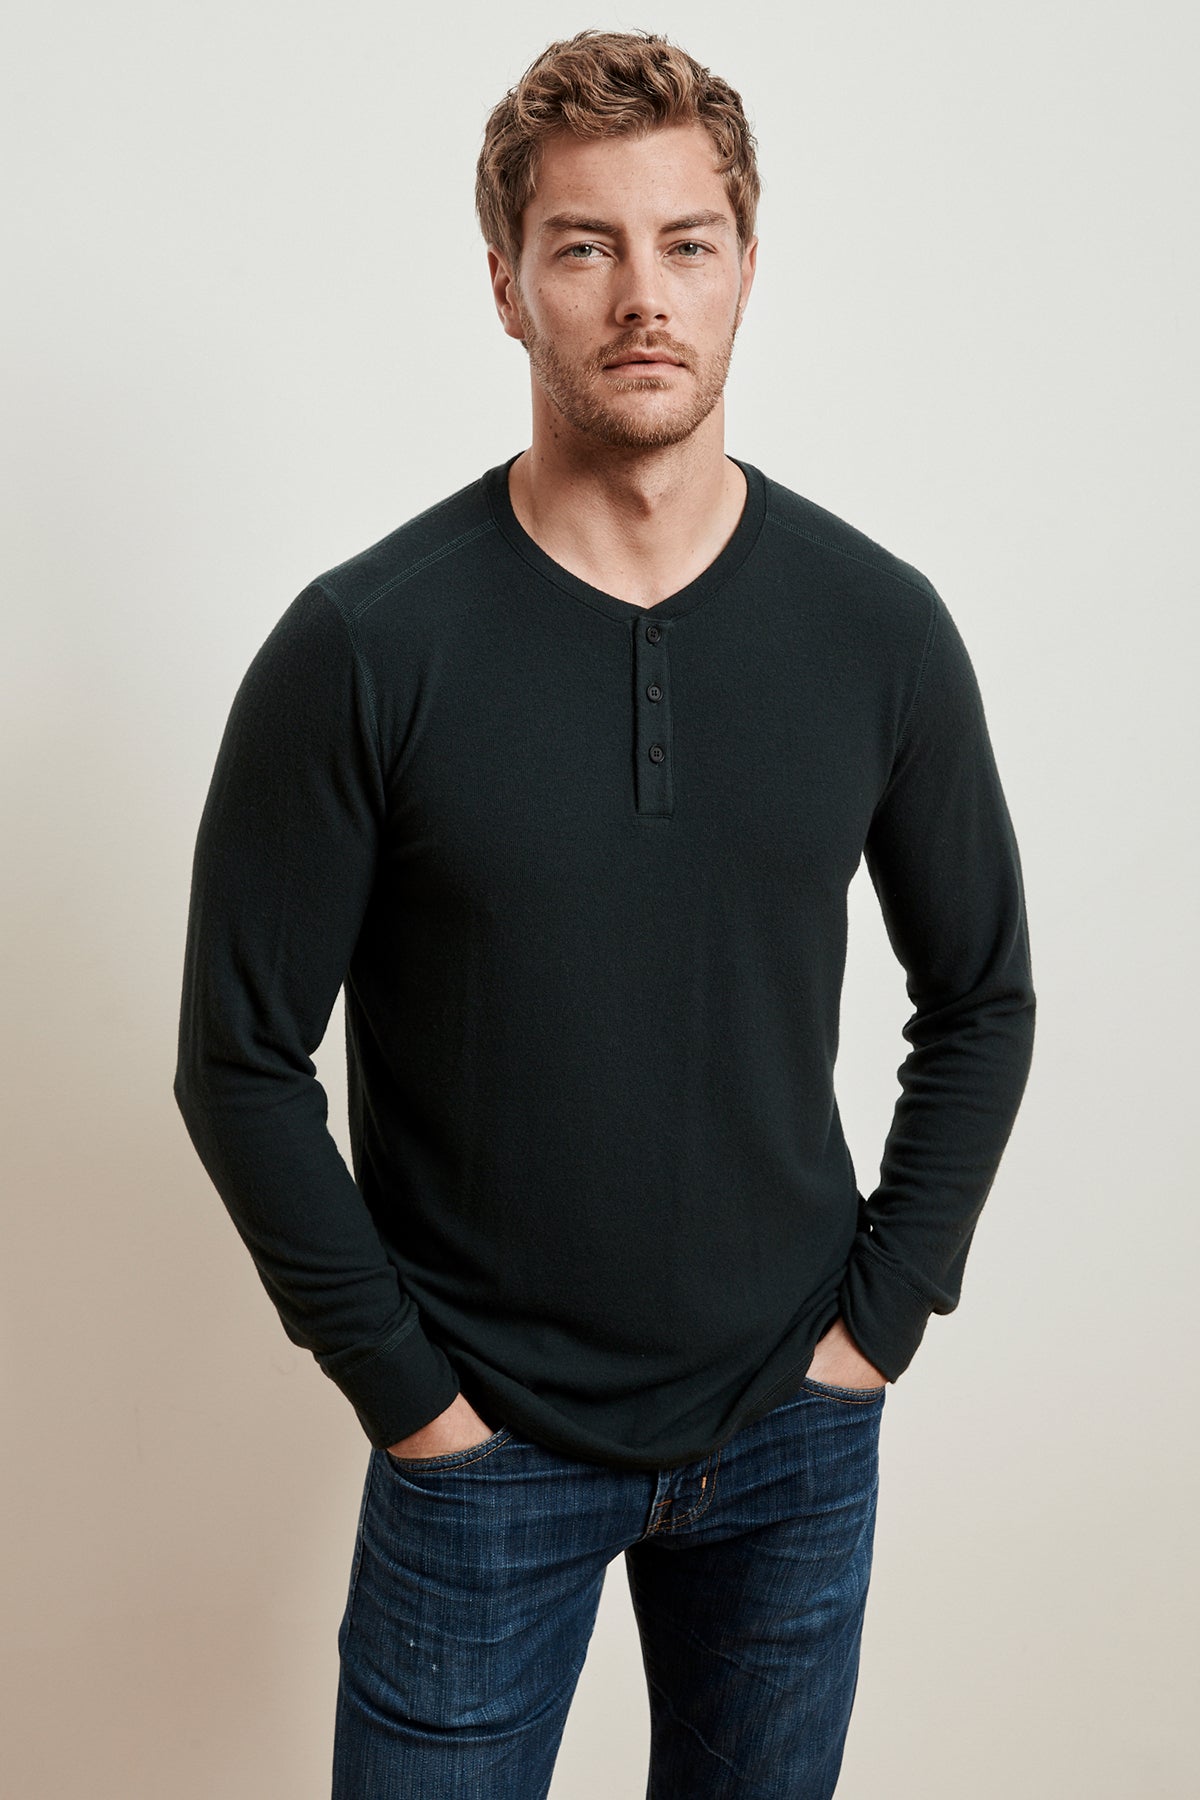 Men's Henley - Long Sleeves in Black Cotton Jersey